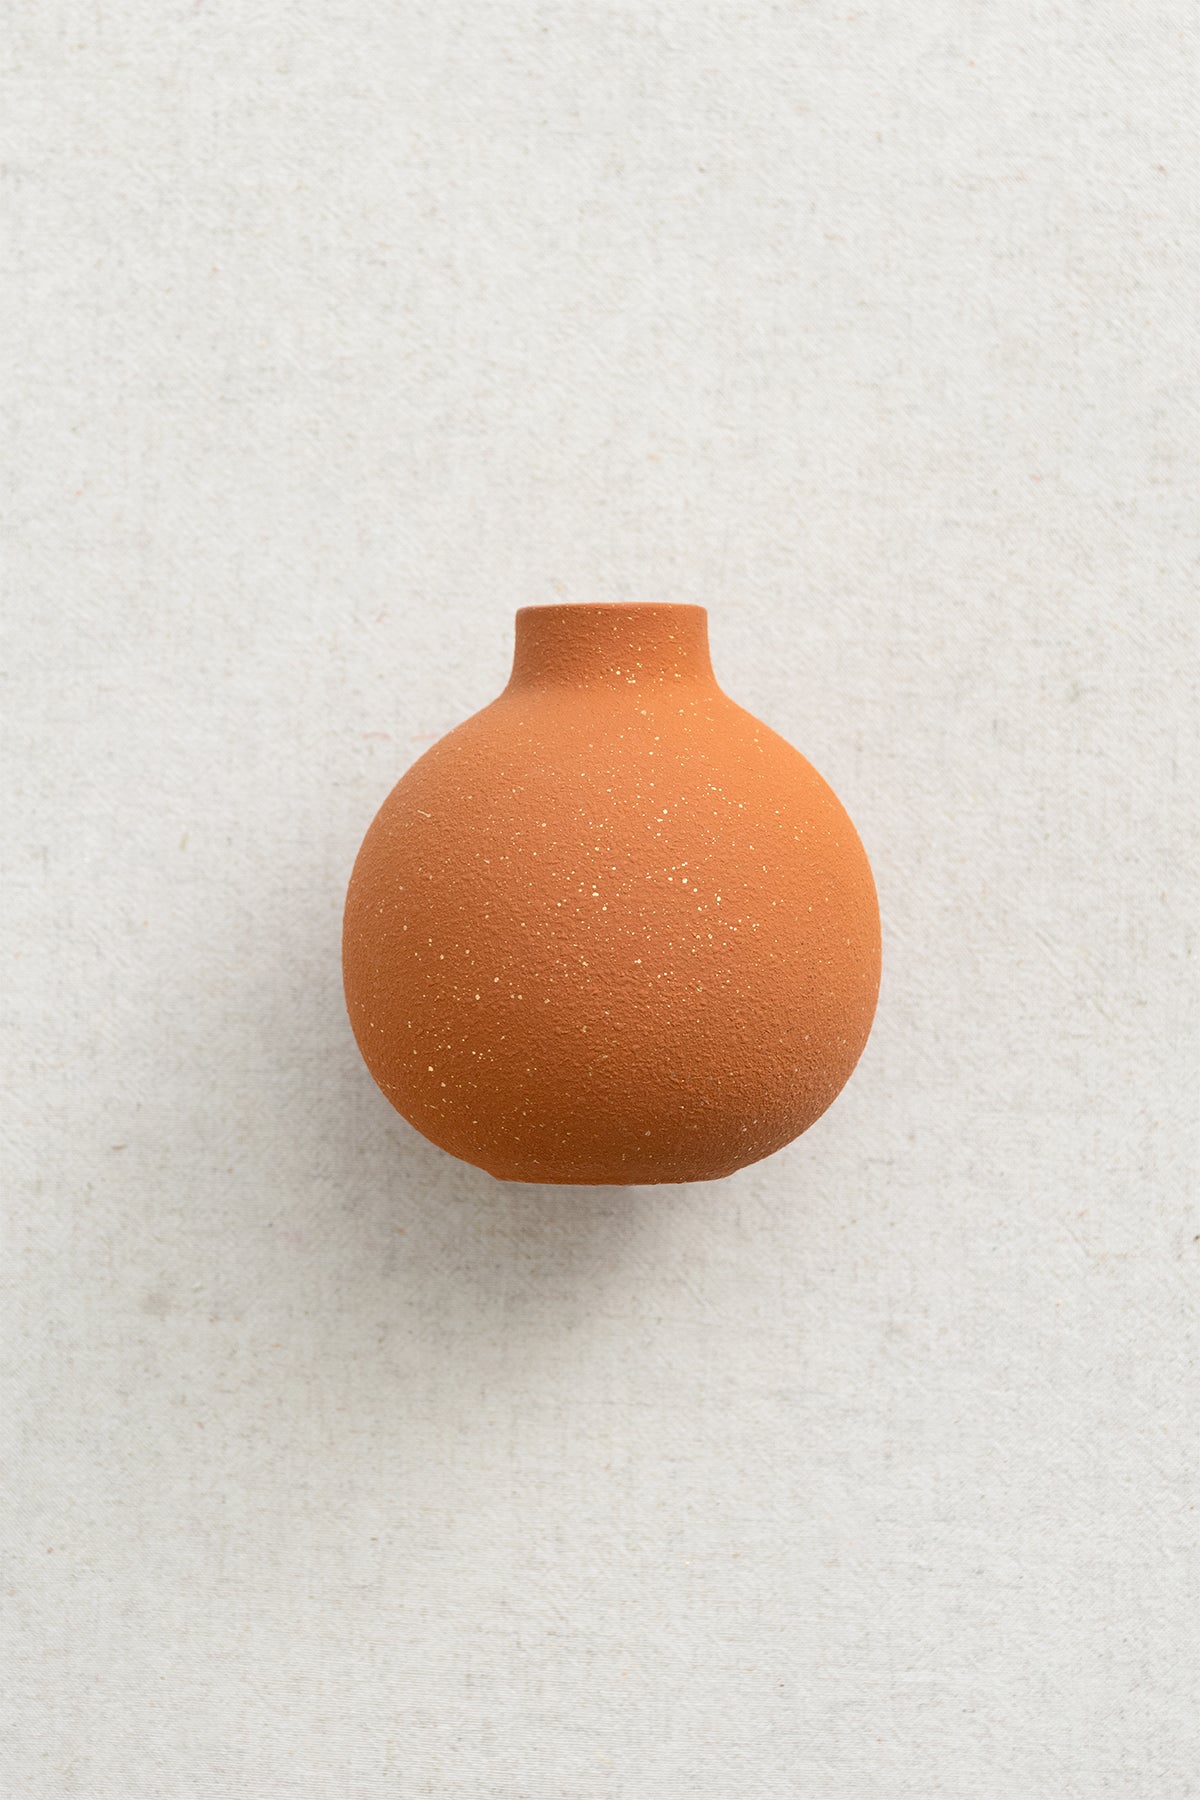 Spherical Ceramic Vase for Halloween in Black & Pumpkin Orange | CLEARANCE